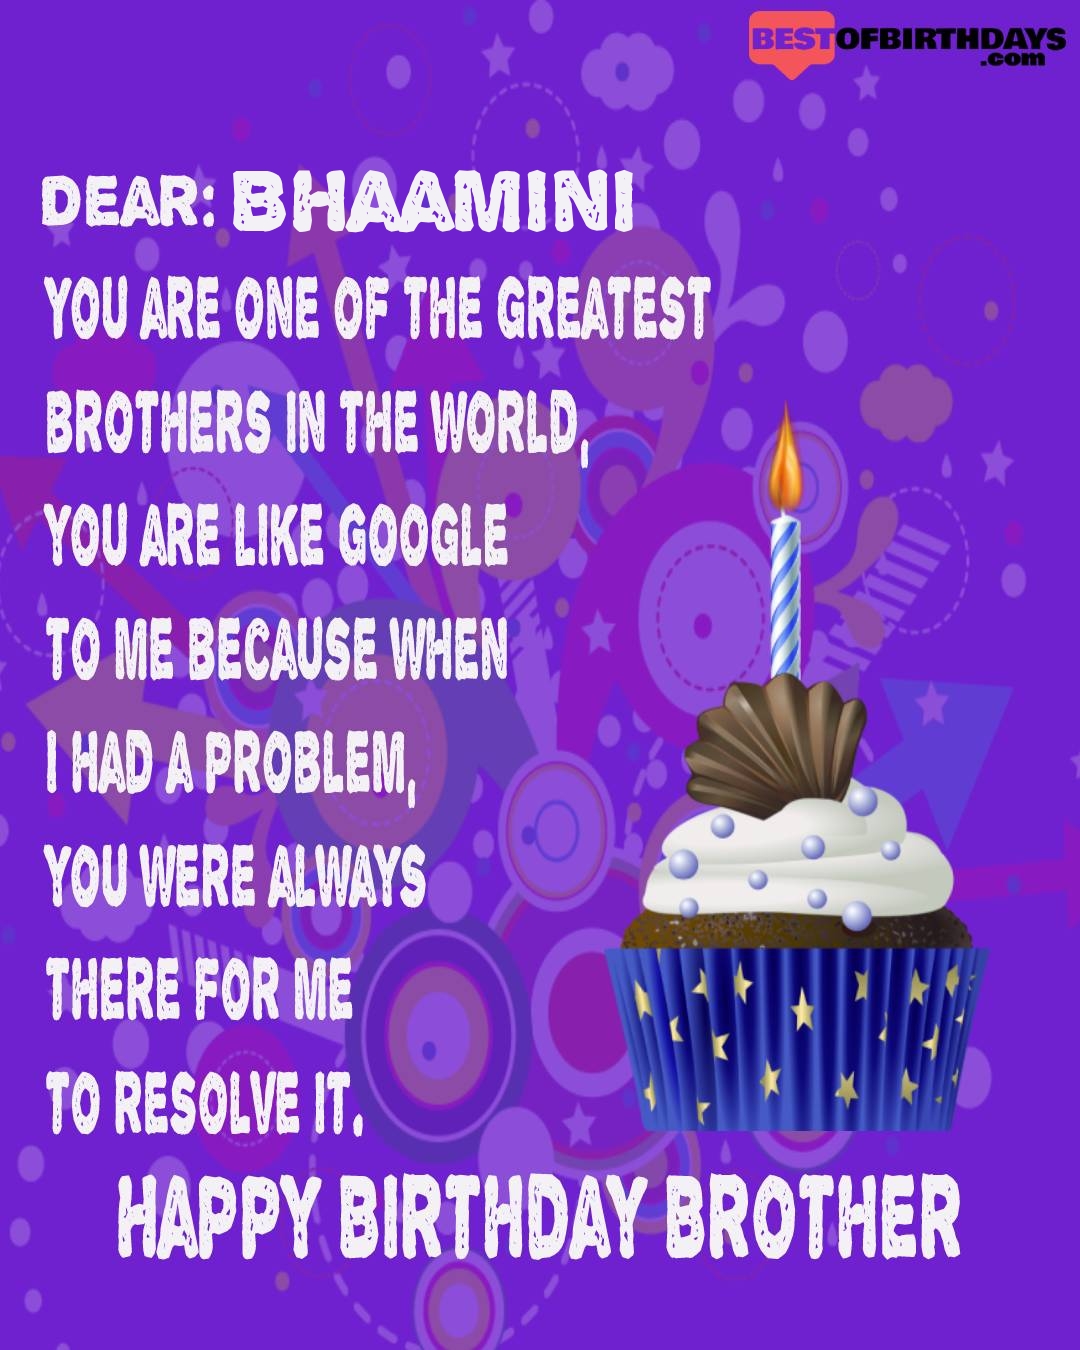 Happy birthday bhaamini bhai brother bro